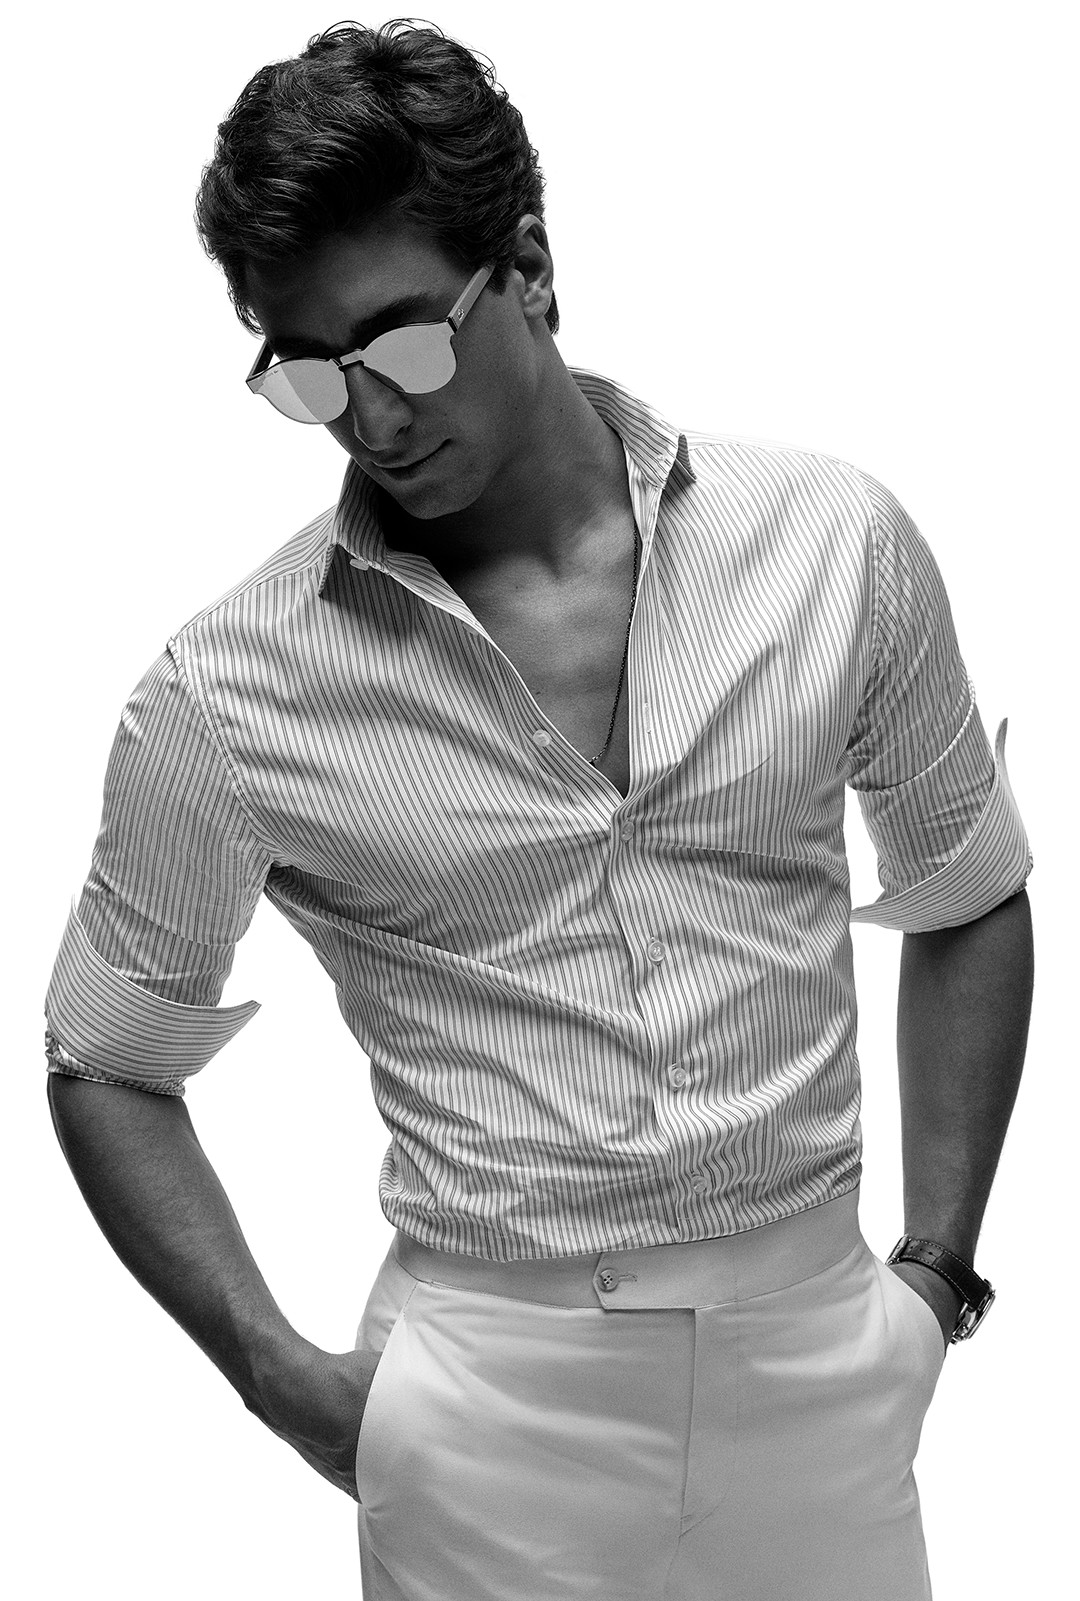 PEDRO CORULLA: Óculos Lacoste | Camisa e calça Pedro Corulla | Sapatos e colar Acervo | Relógio Omega (Foto: Gui Paganini)